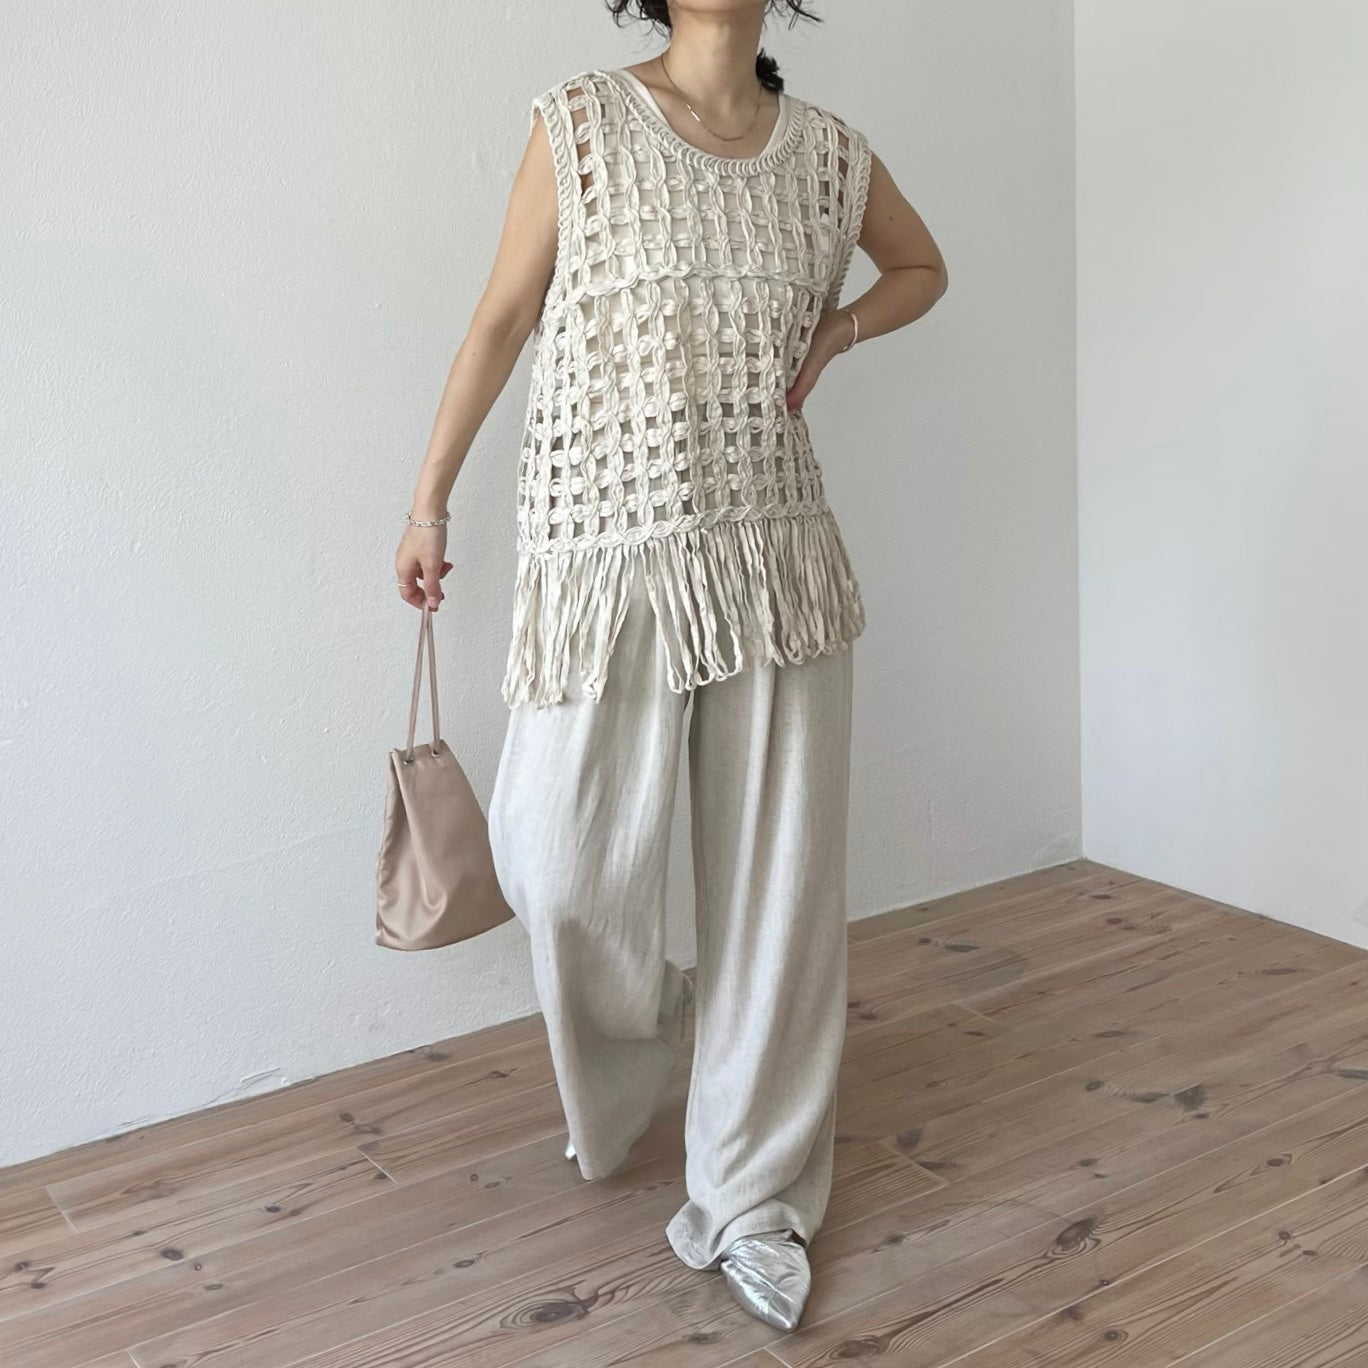 【2点SET】crochet vest + tank top set / beige